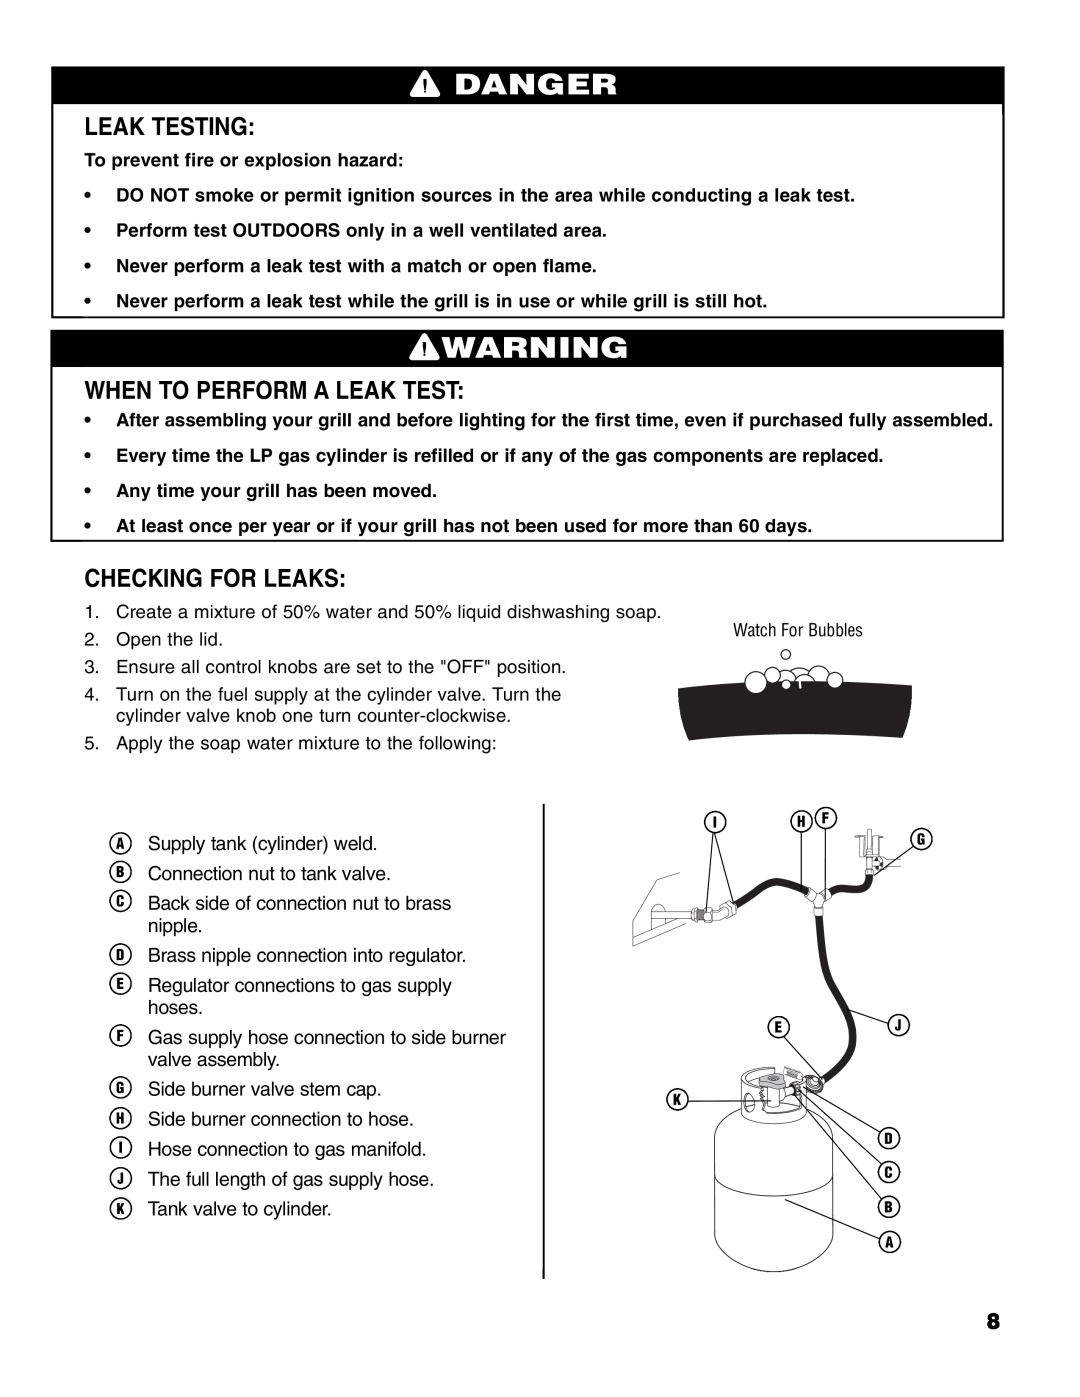 Brinkmann 4 Burner Gas Grill Grill owner manual Leak Testing, When To Perform A Leak Test, Checking For Leaks, Danger 